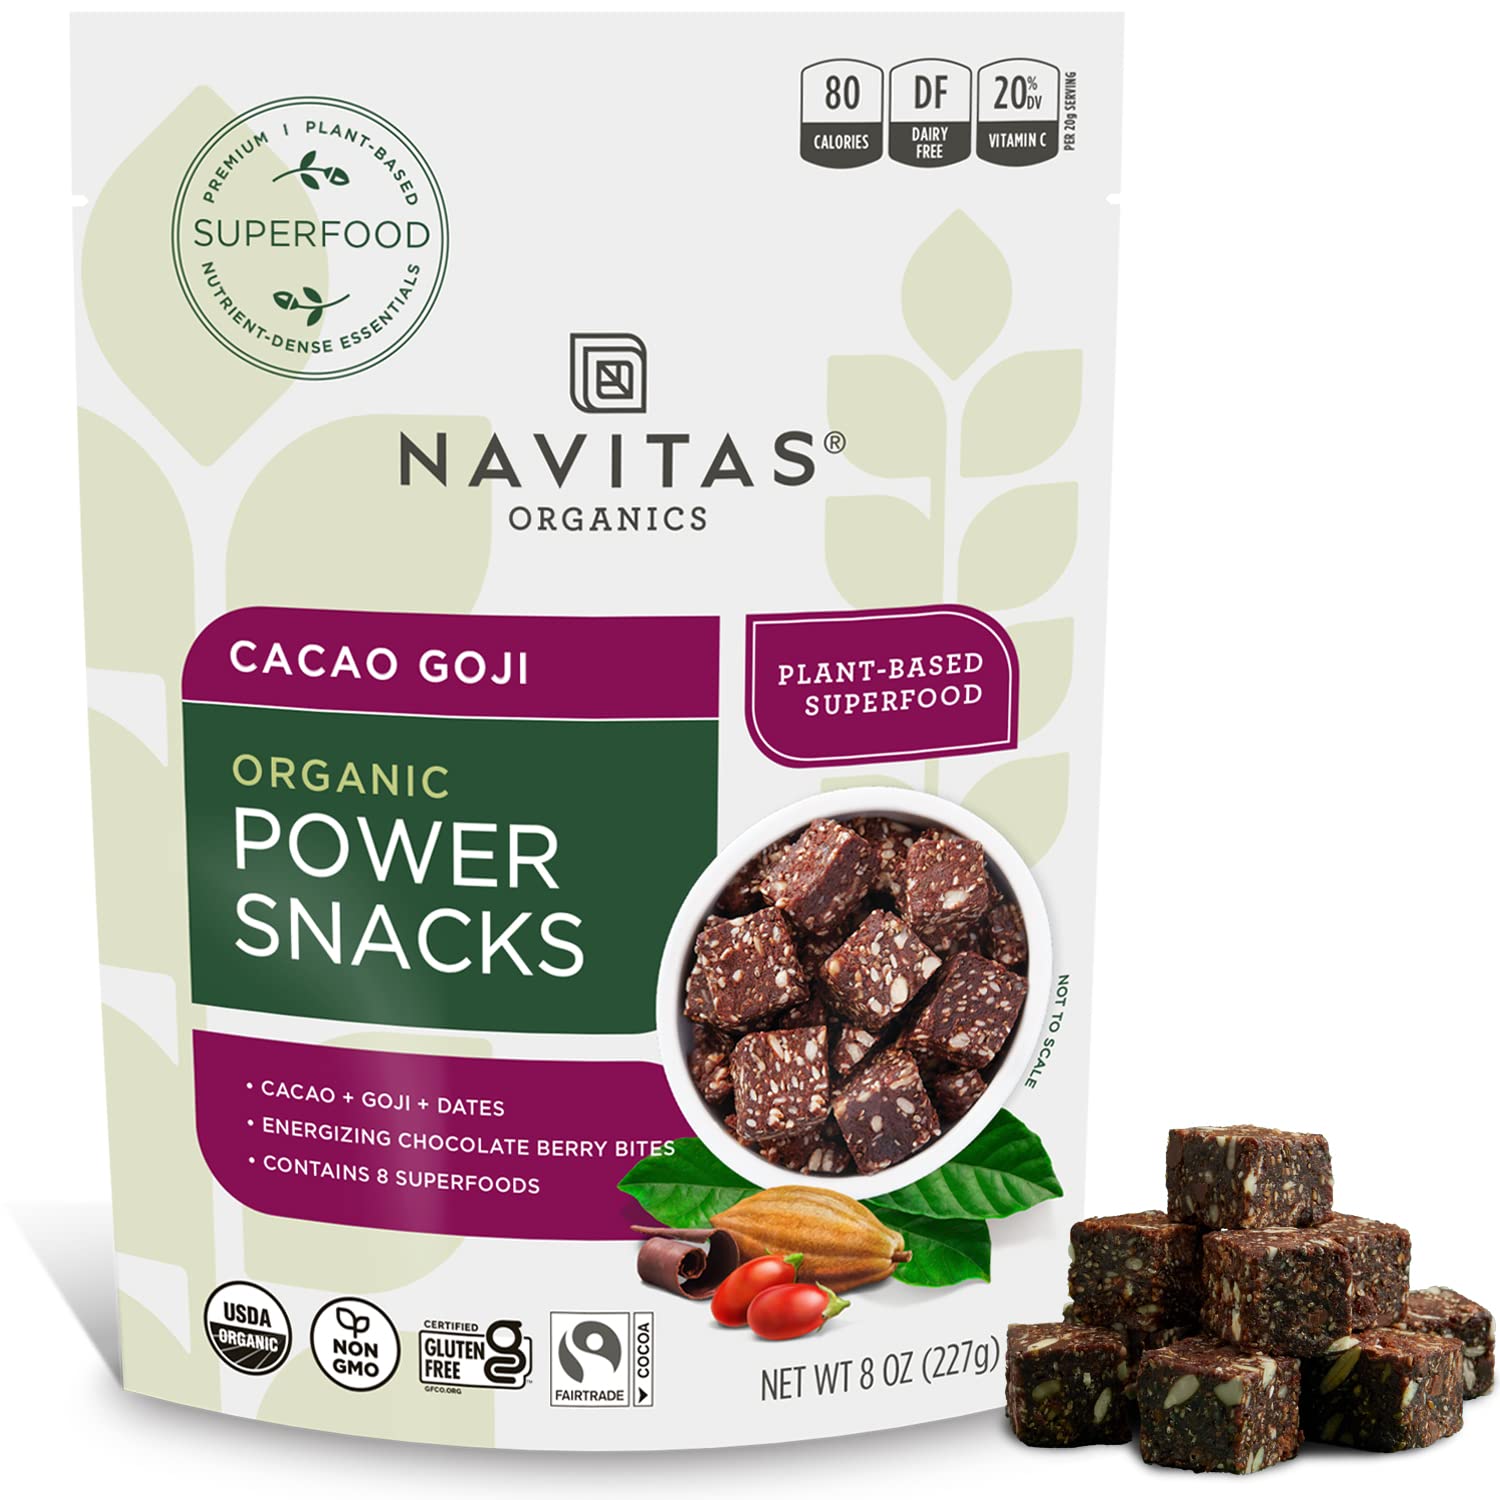 8-oz Bag Navitas Organics SuperFood Power Snacks (Cacao Goji) $3.90 w/ S&S + Free Shipping w/ Prime or on $35+